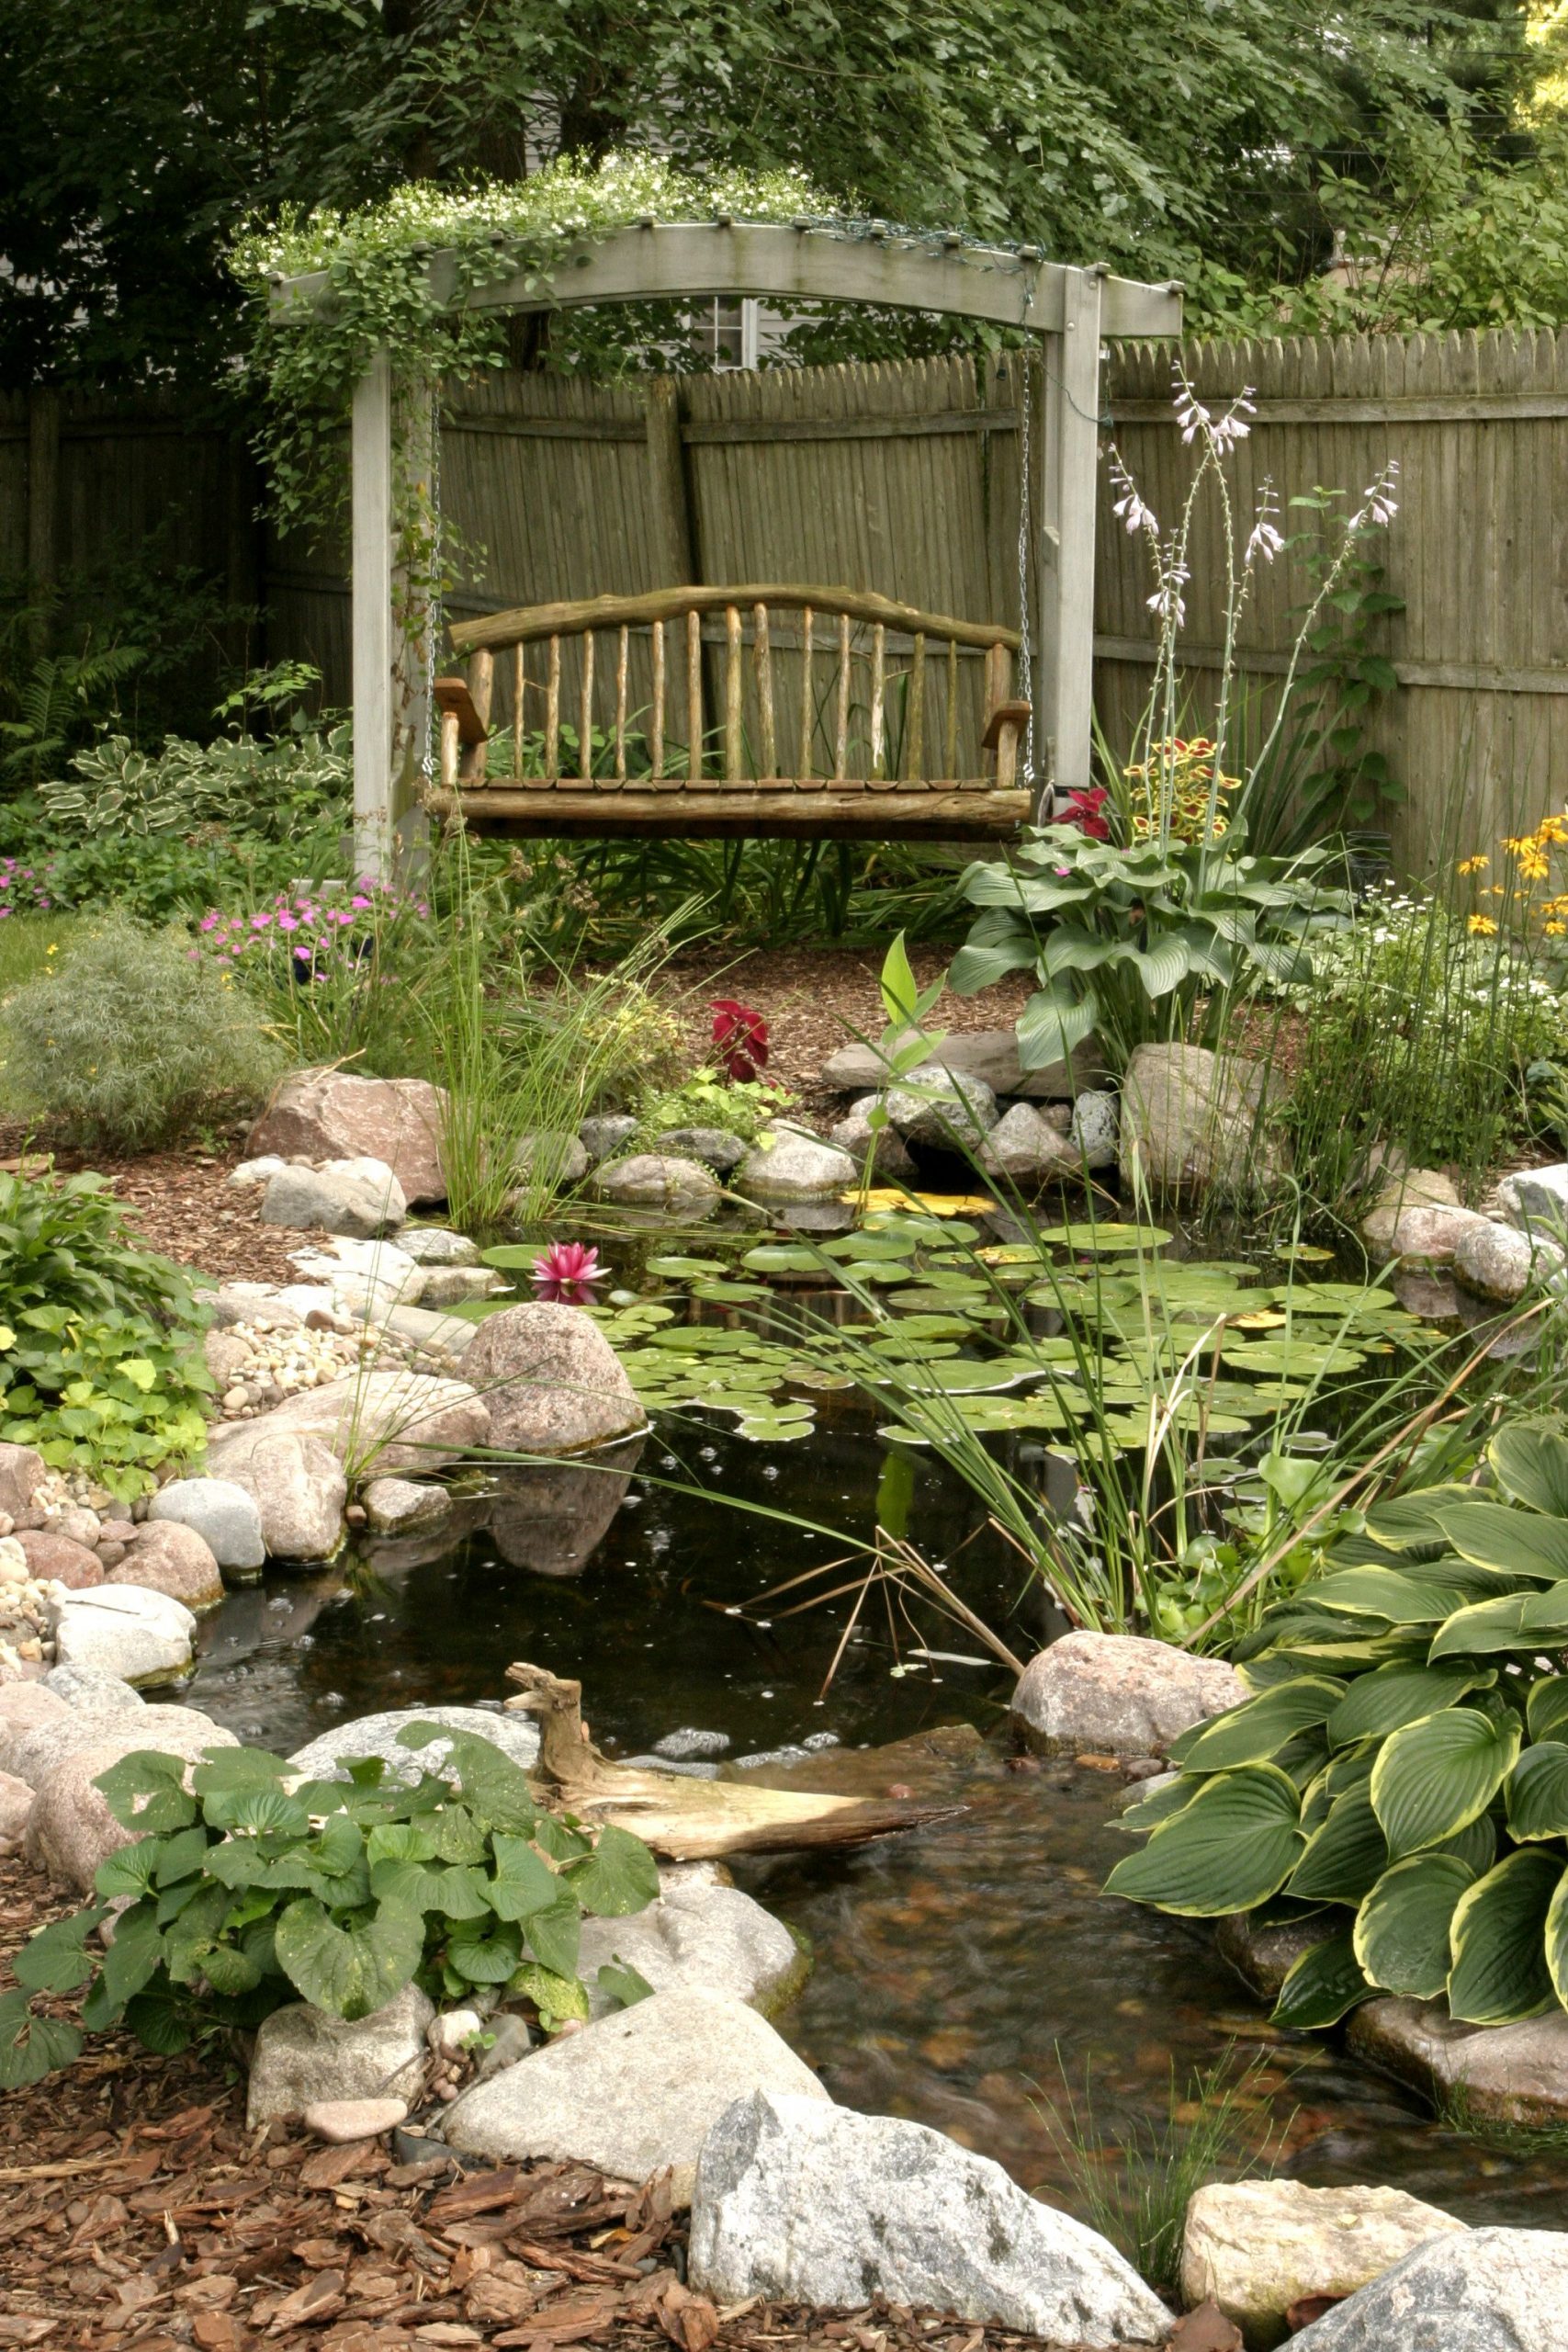 Rustic Swing By A Backyard Pond And Stream. | Bassin De ... avec Bassin De Jardin Préformé